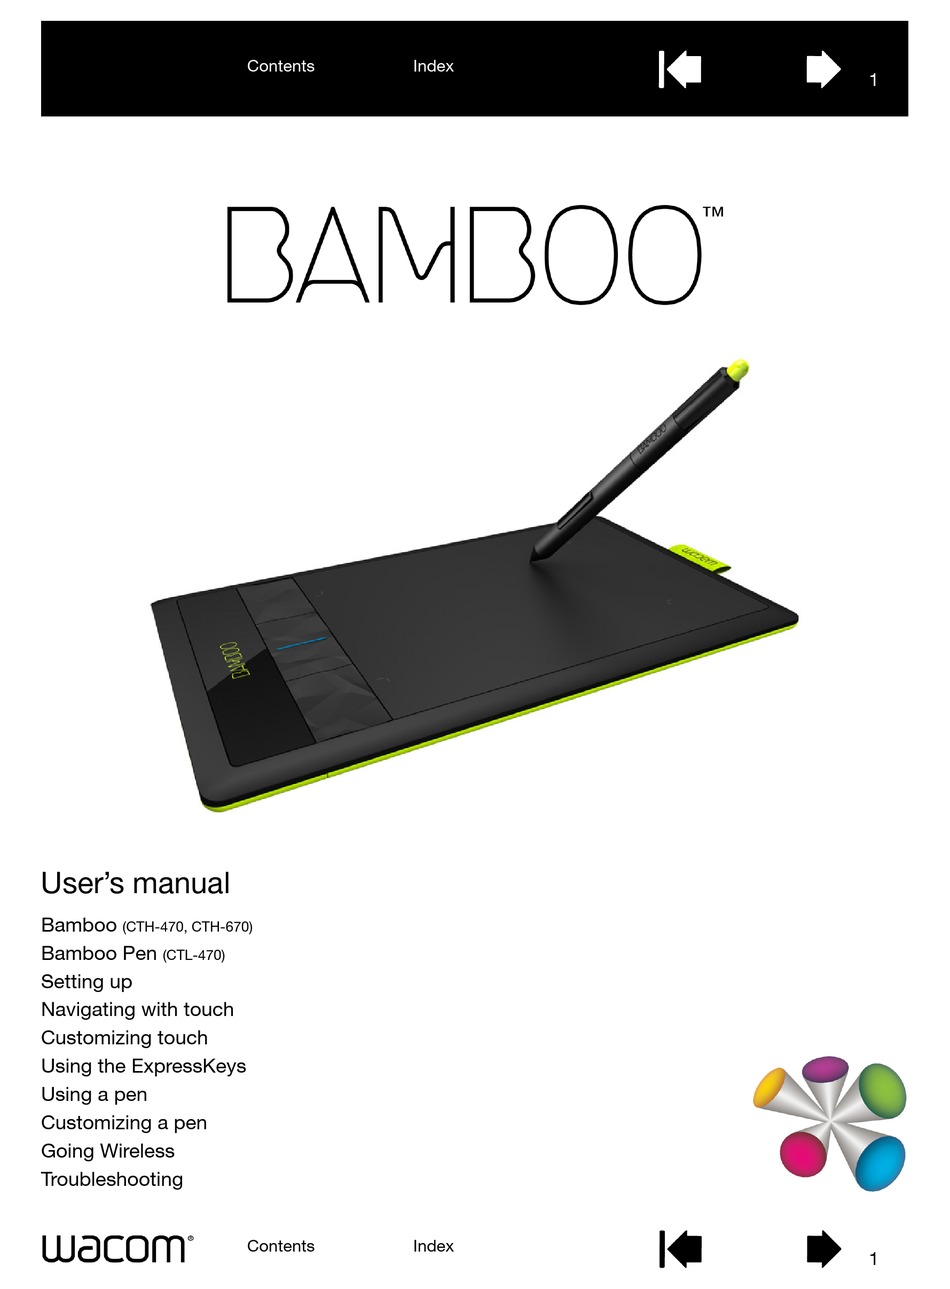 macbook g4 no reconoce bamboo cht 460